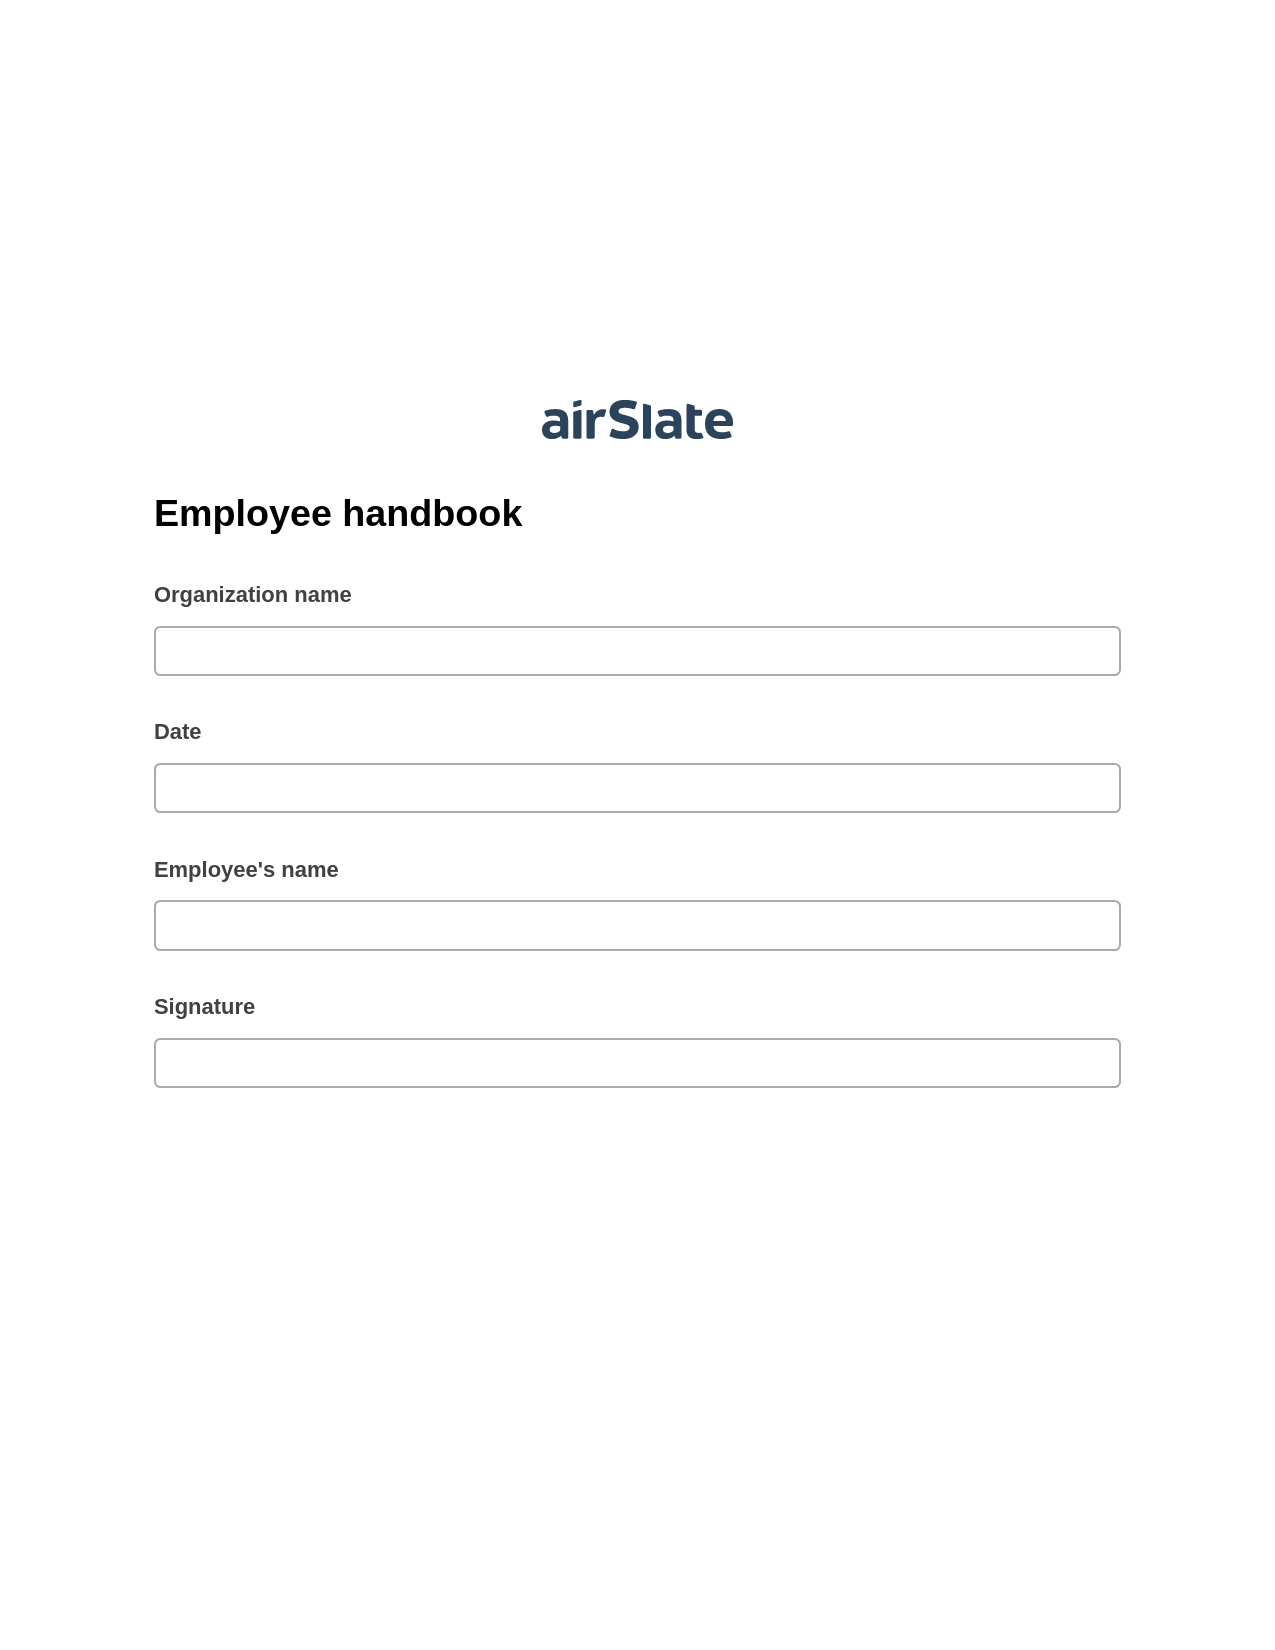 Multirole Employee handbook Pre-fill Slate from MS Dynamics 365 Records Bot, Google Sheet Two-Way Binding Bot, Webhook Postfinish Bot